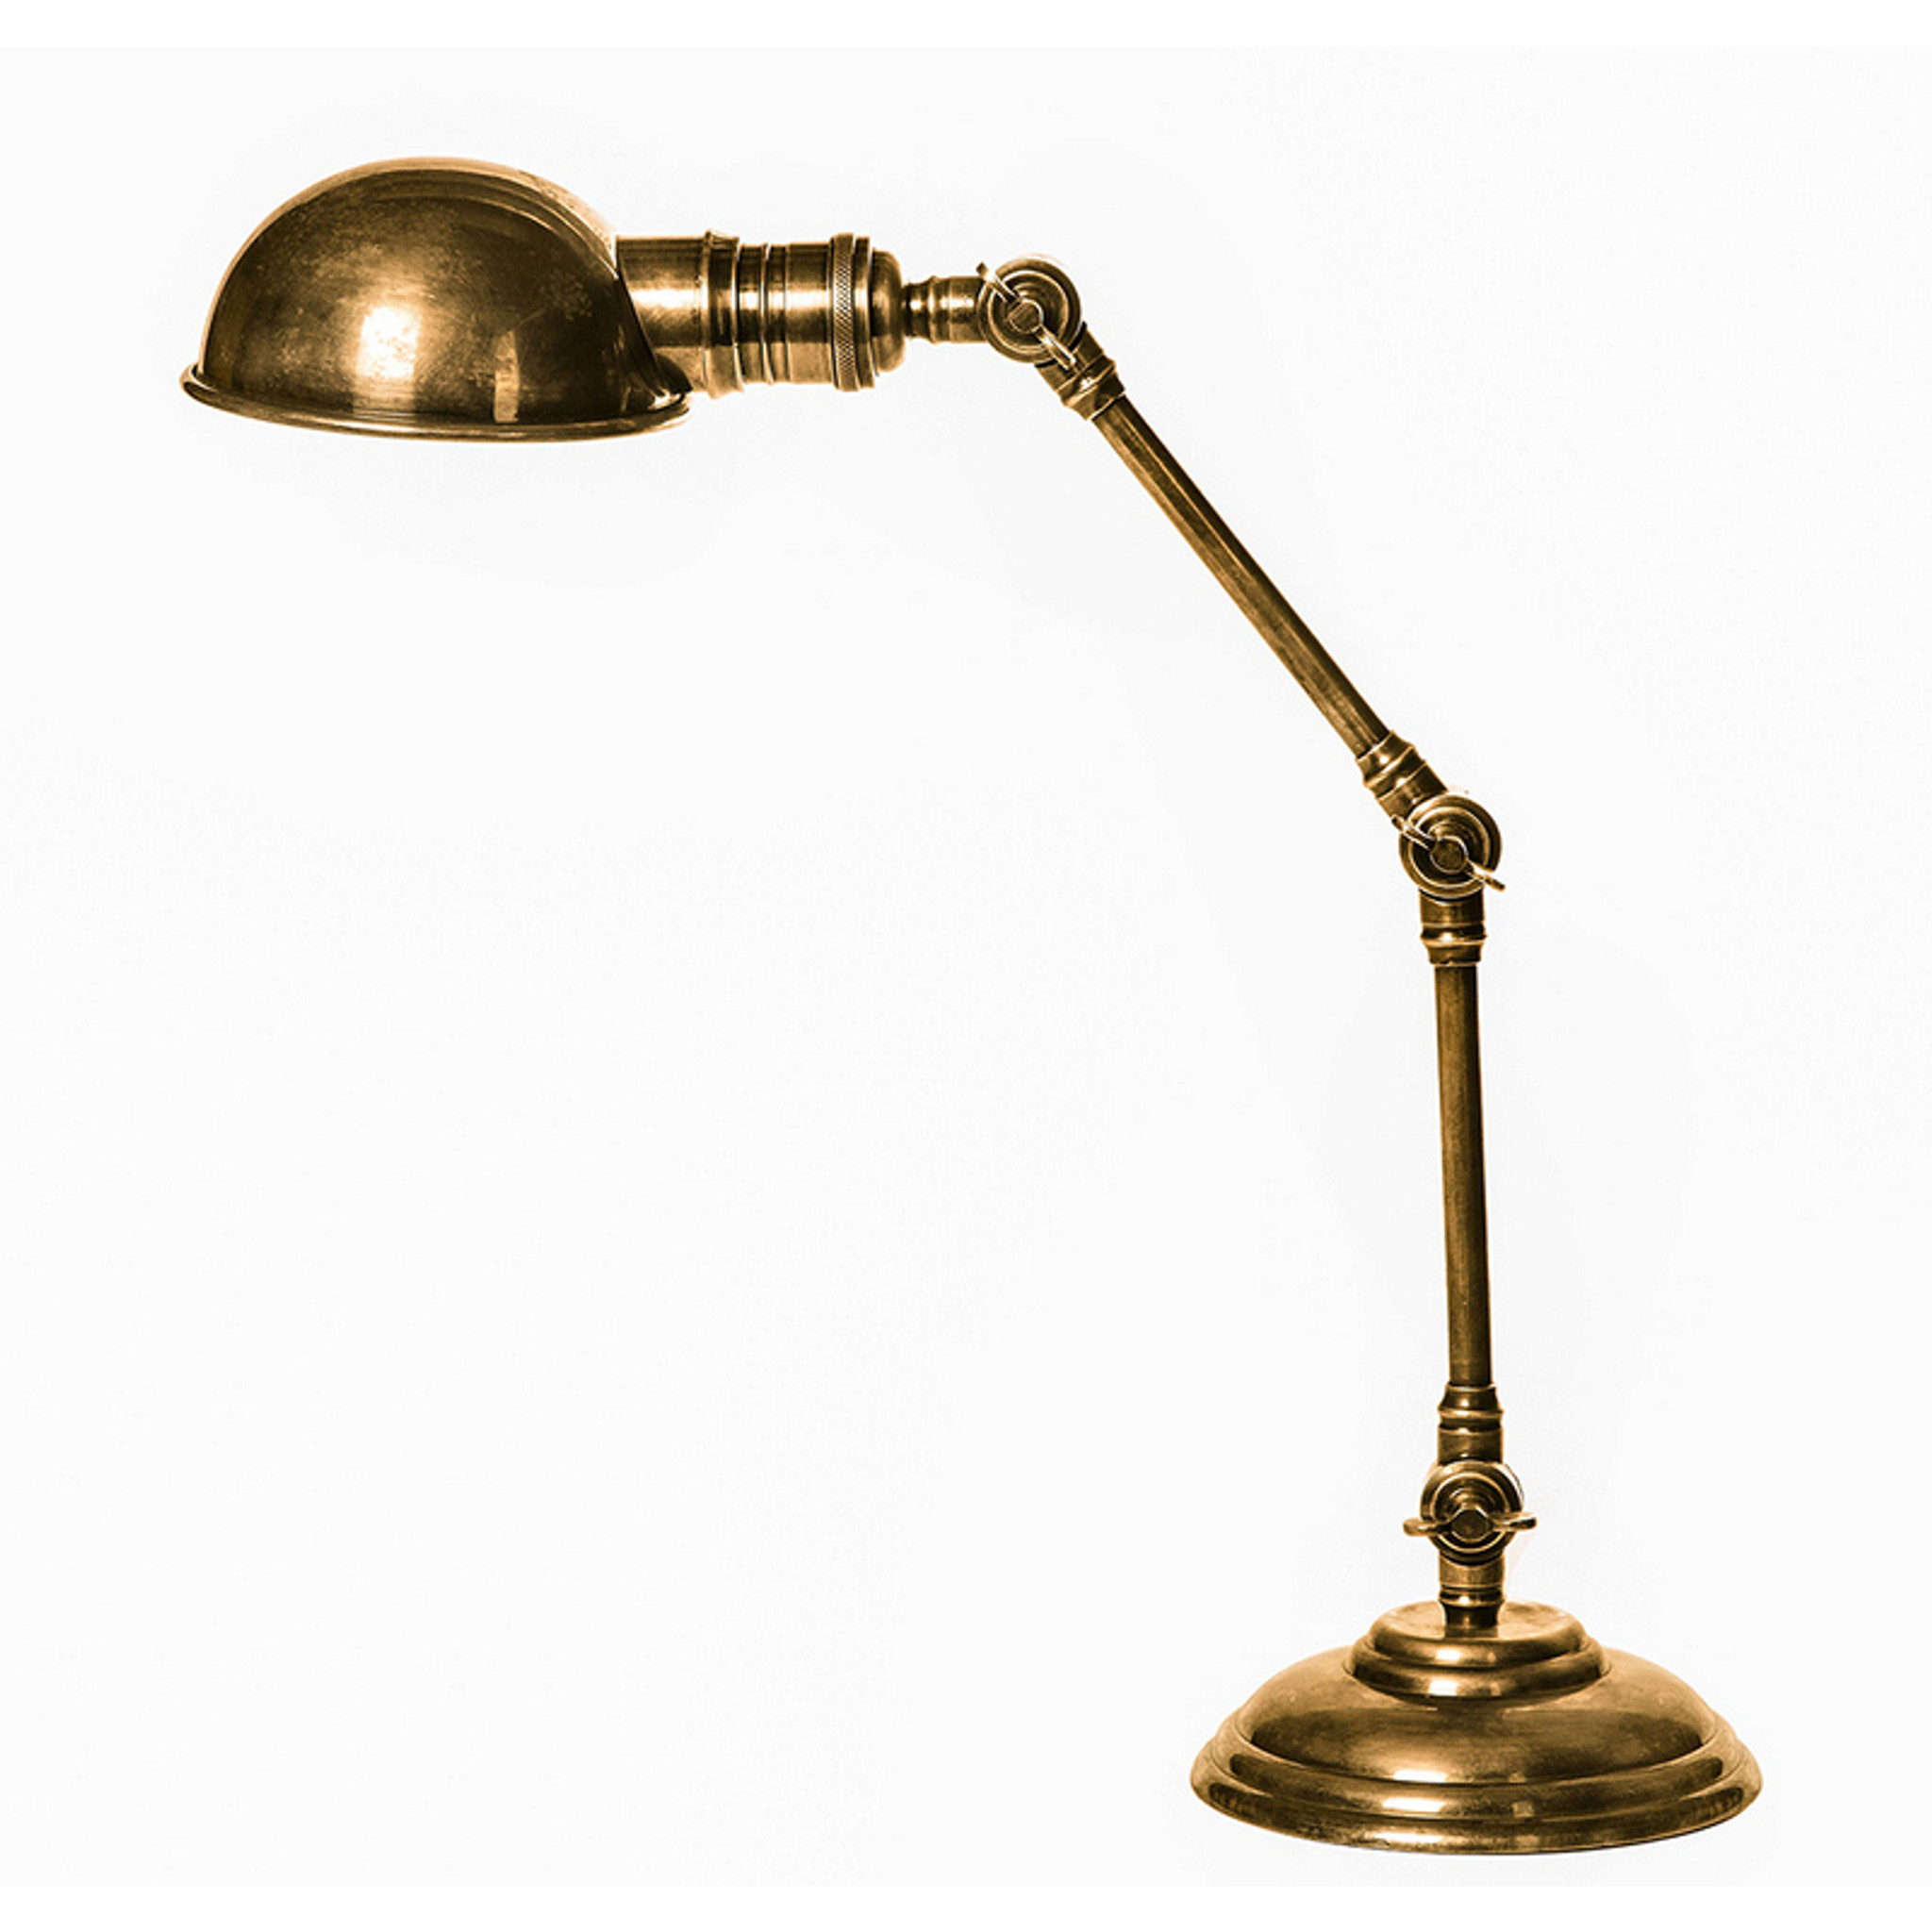 Stamford Dome Adjustable Desk Lamp - Antique Brass - LIGHTING - Emac